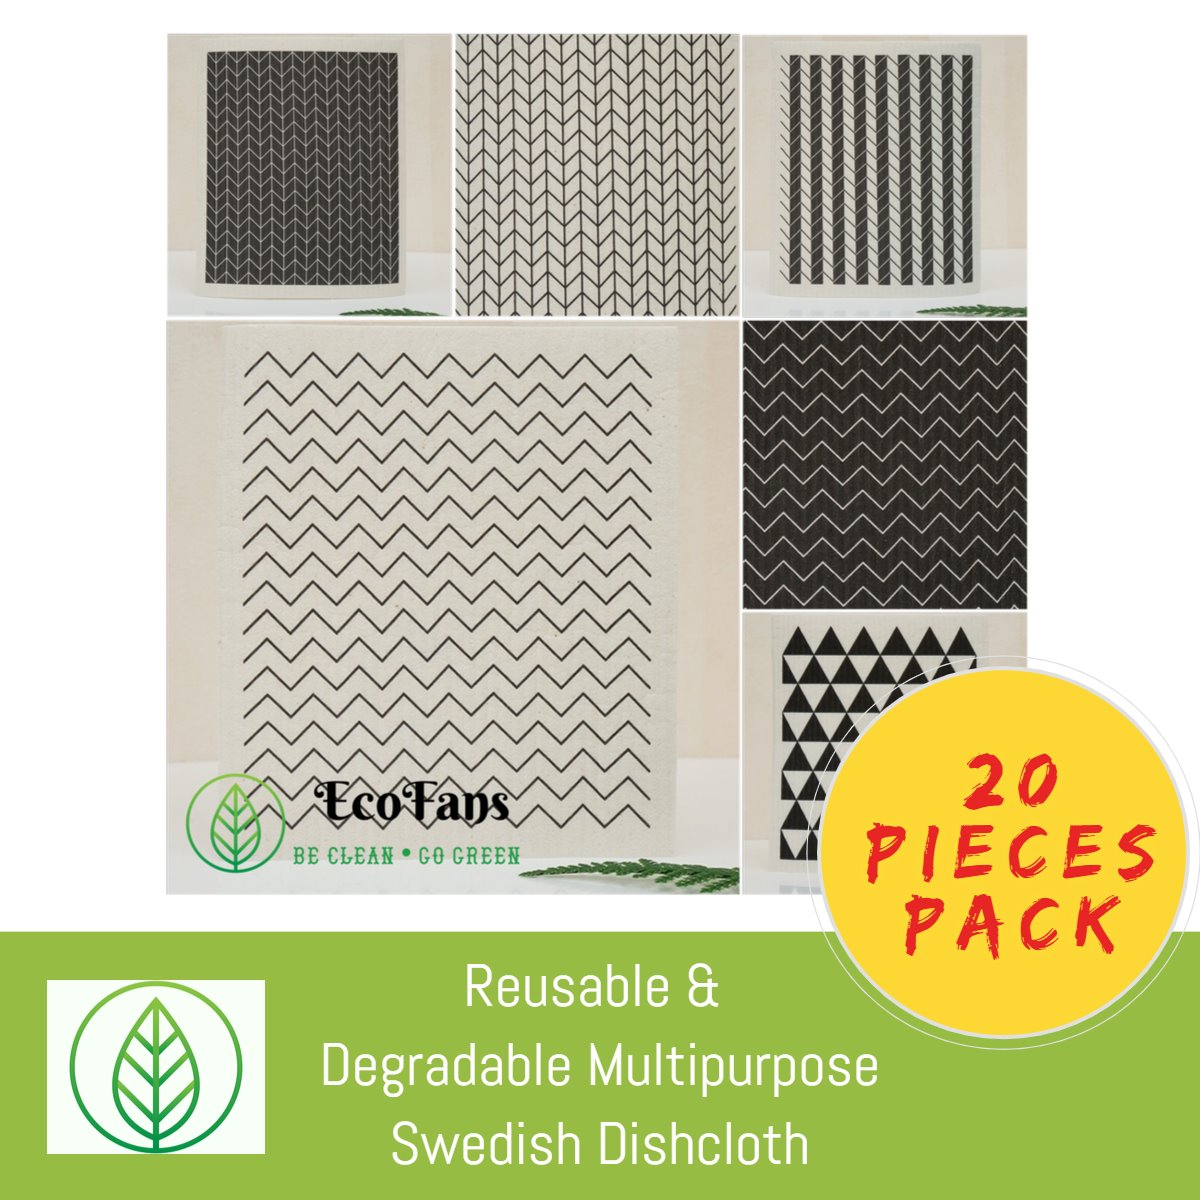 KT051-X-20-Reusable & Degradable Multipurpose Swedish Dishcloth-Cloth-ecofans-20-Tiles-